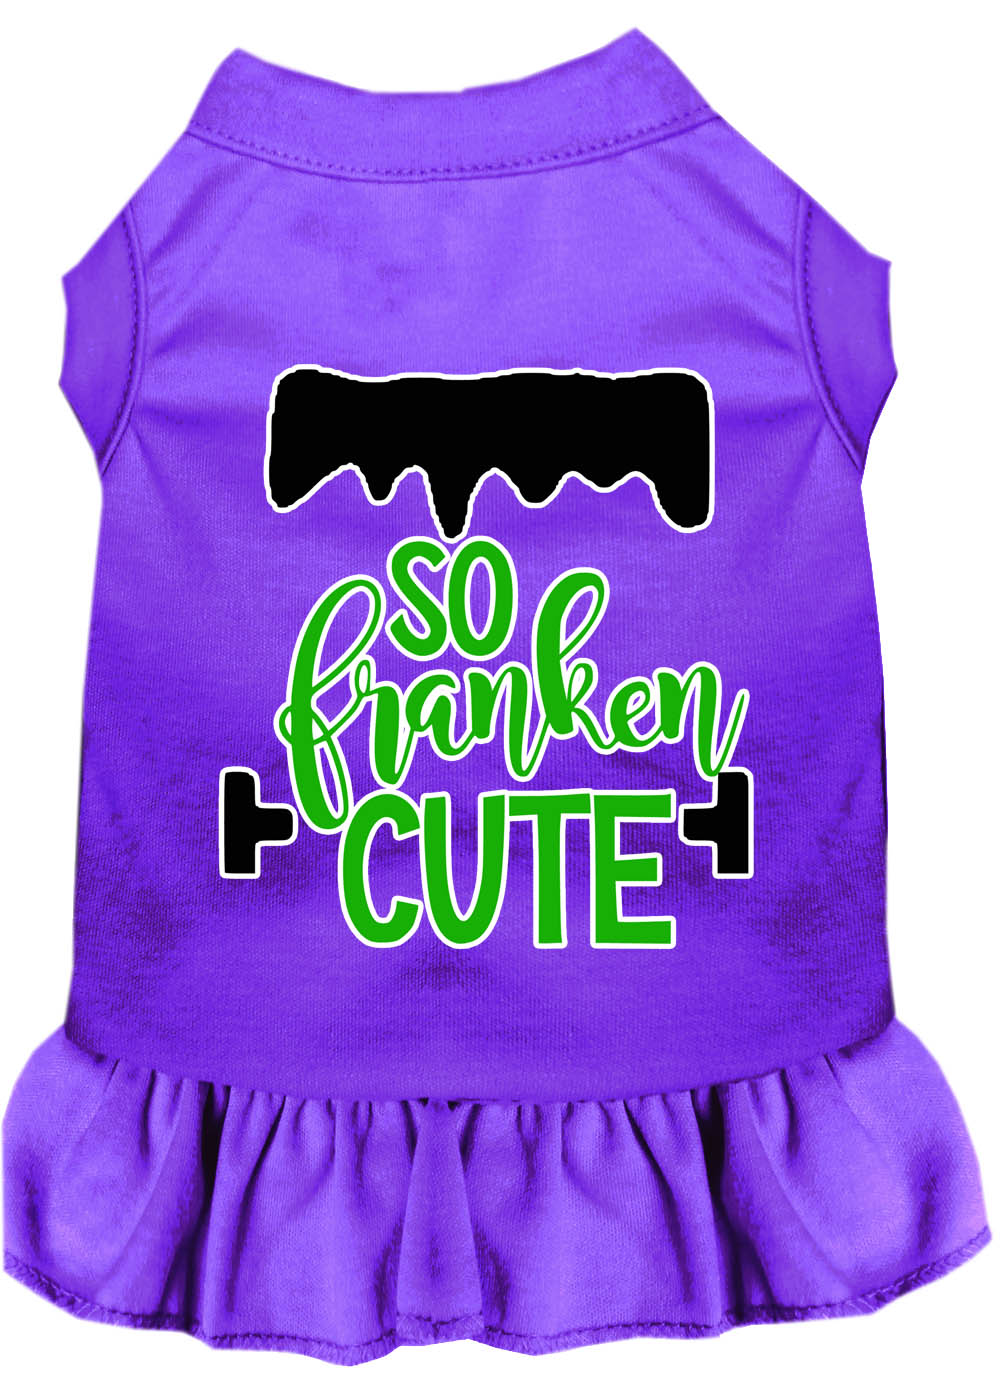 So Franken Cute Screen Print Dog Dress Purple Lg